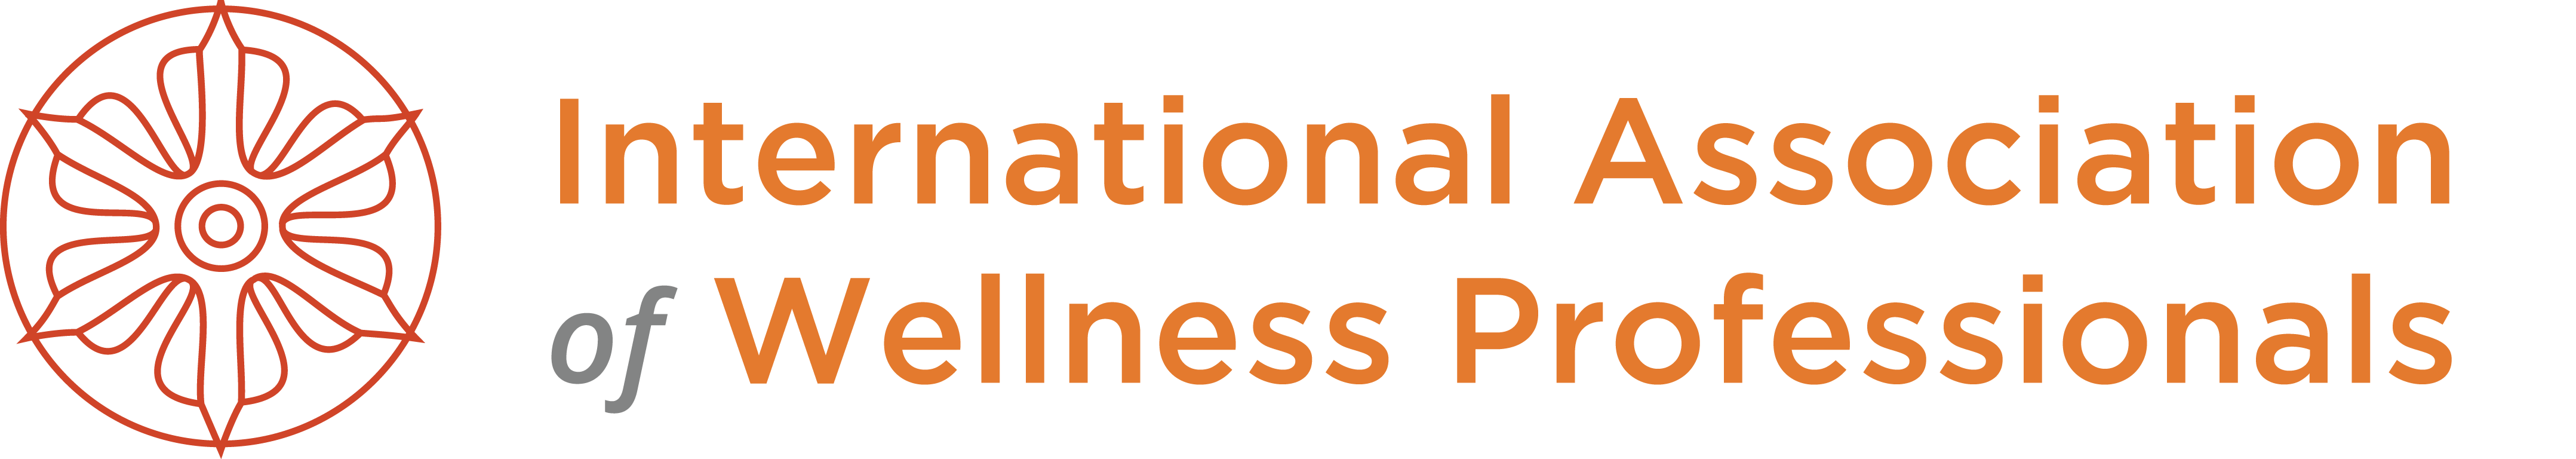 International Association of Wellness Professionals  Logo